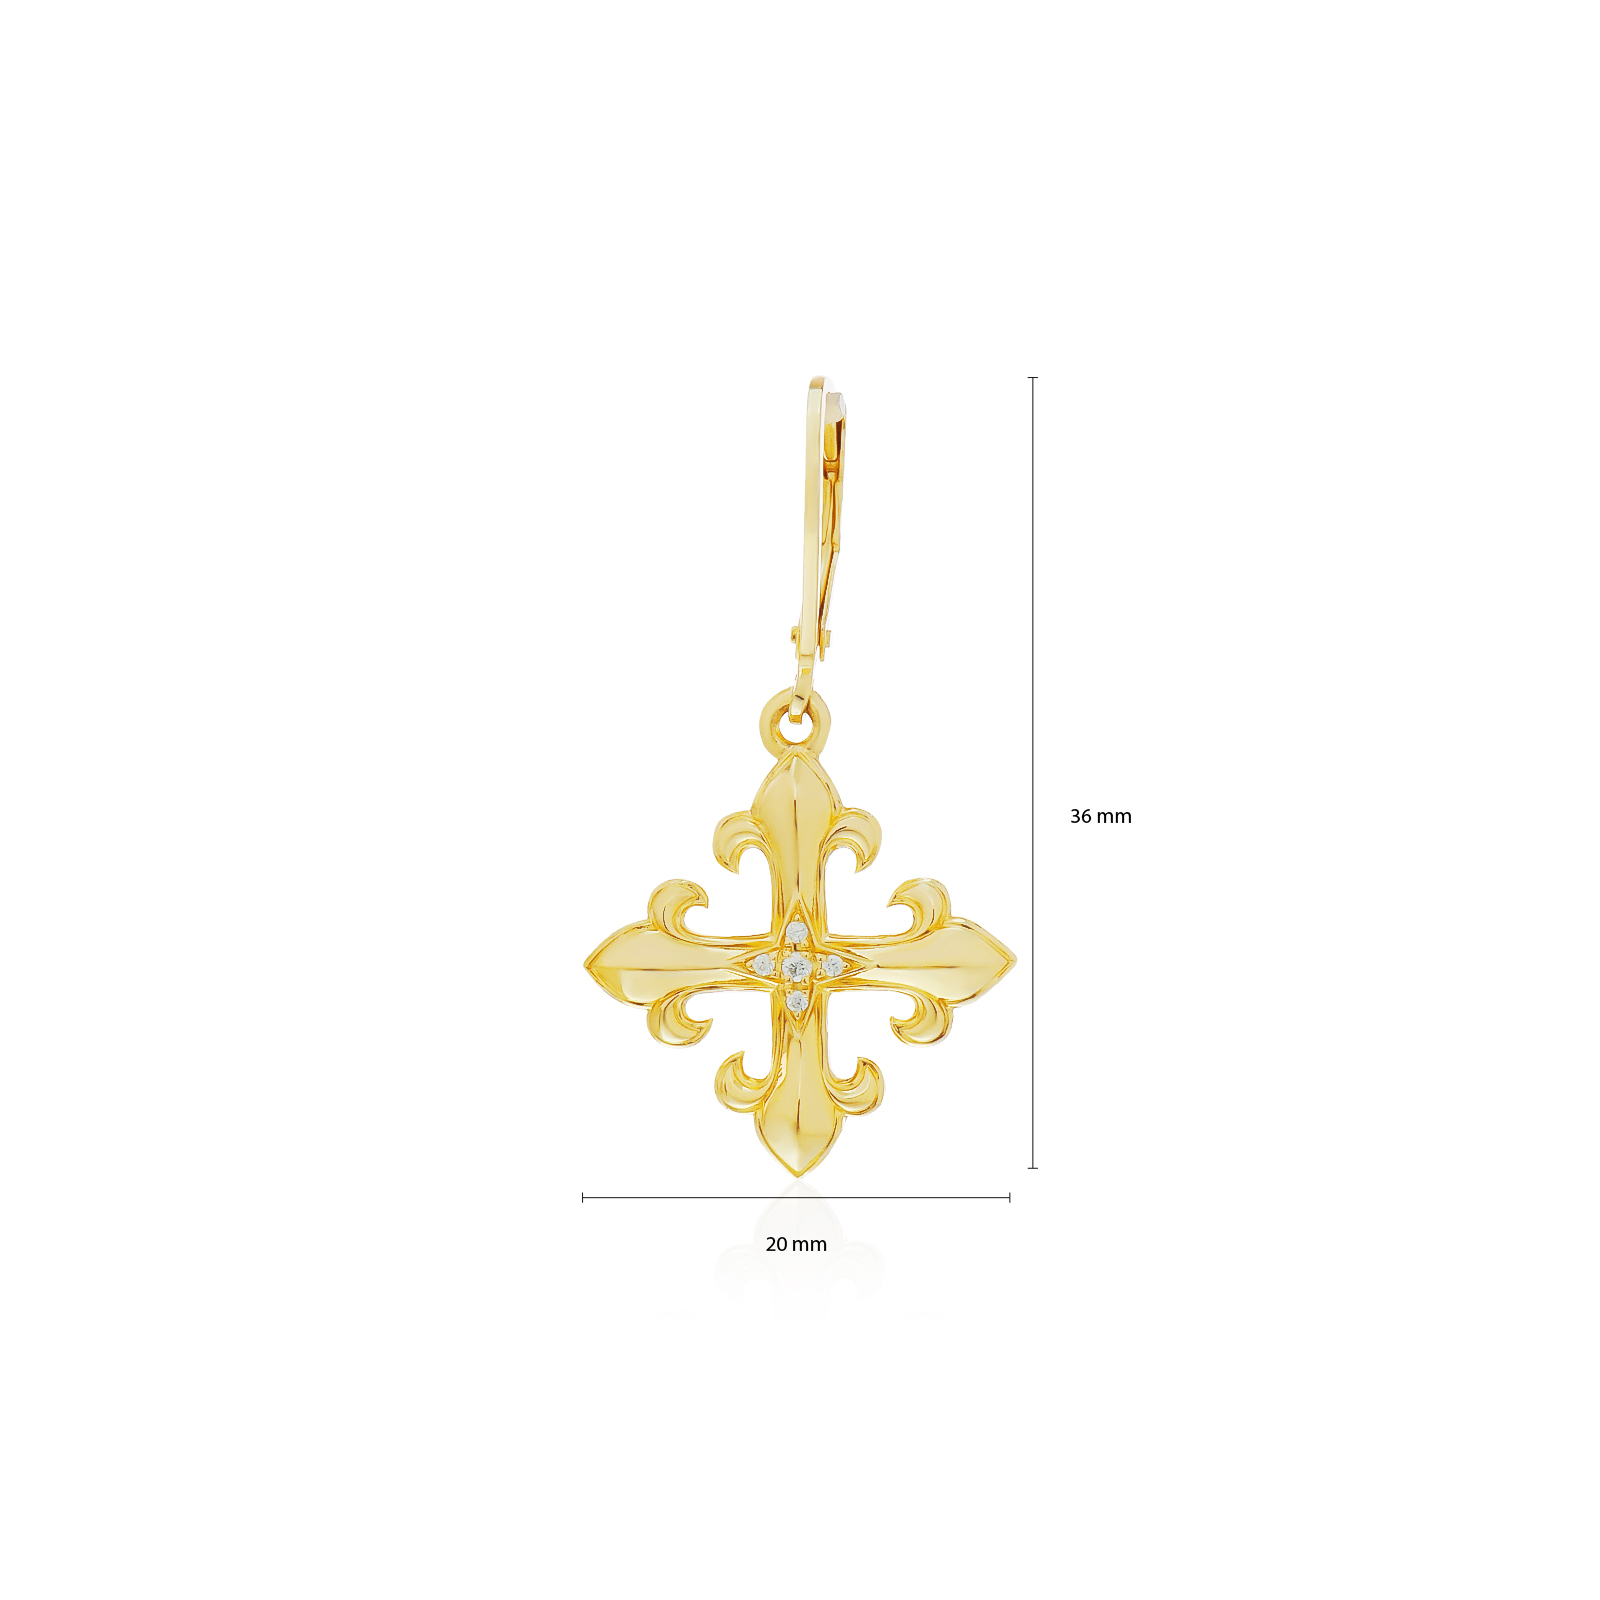 Rituals Cross Royal Crest earring - Gold ต่างหูเงินแท้ 925 แบบห่วงกริ๊กฮักกี้ แกะมือขัดเงาพิเศษ ชุบทองคำแท้ 24 กะรัต ประดับคริสตัล**ขายเป็นชิ้น/ข้าง